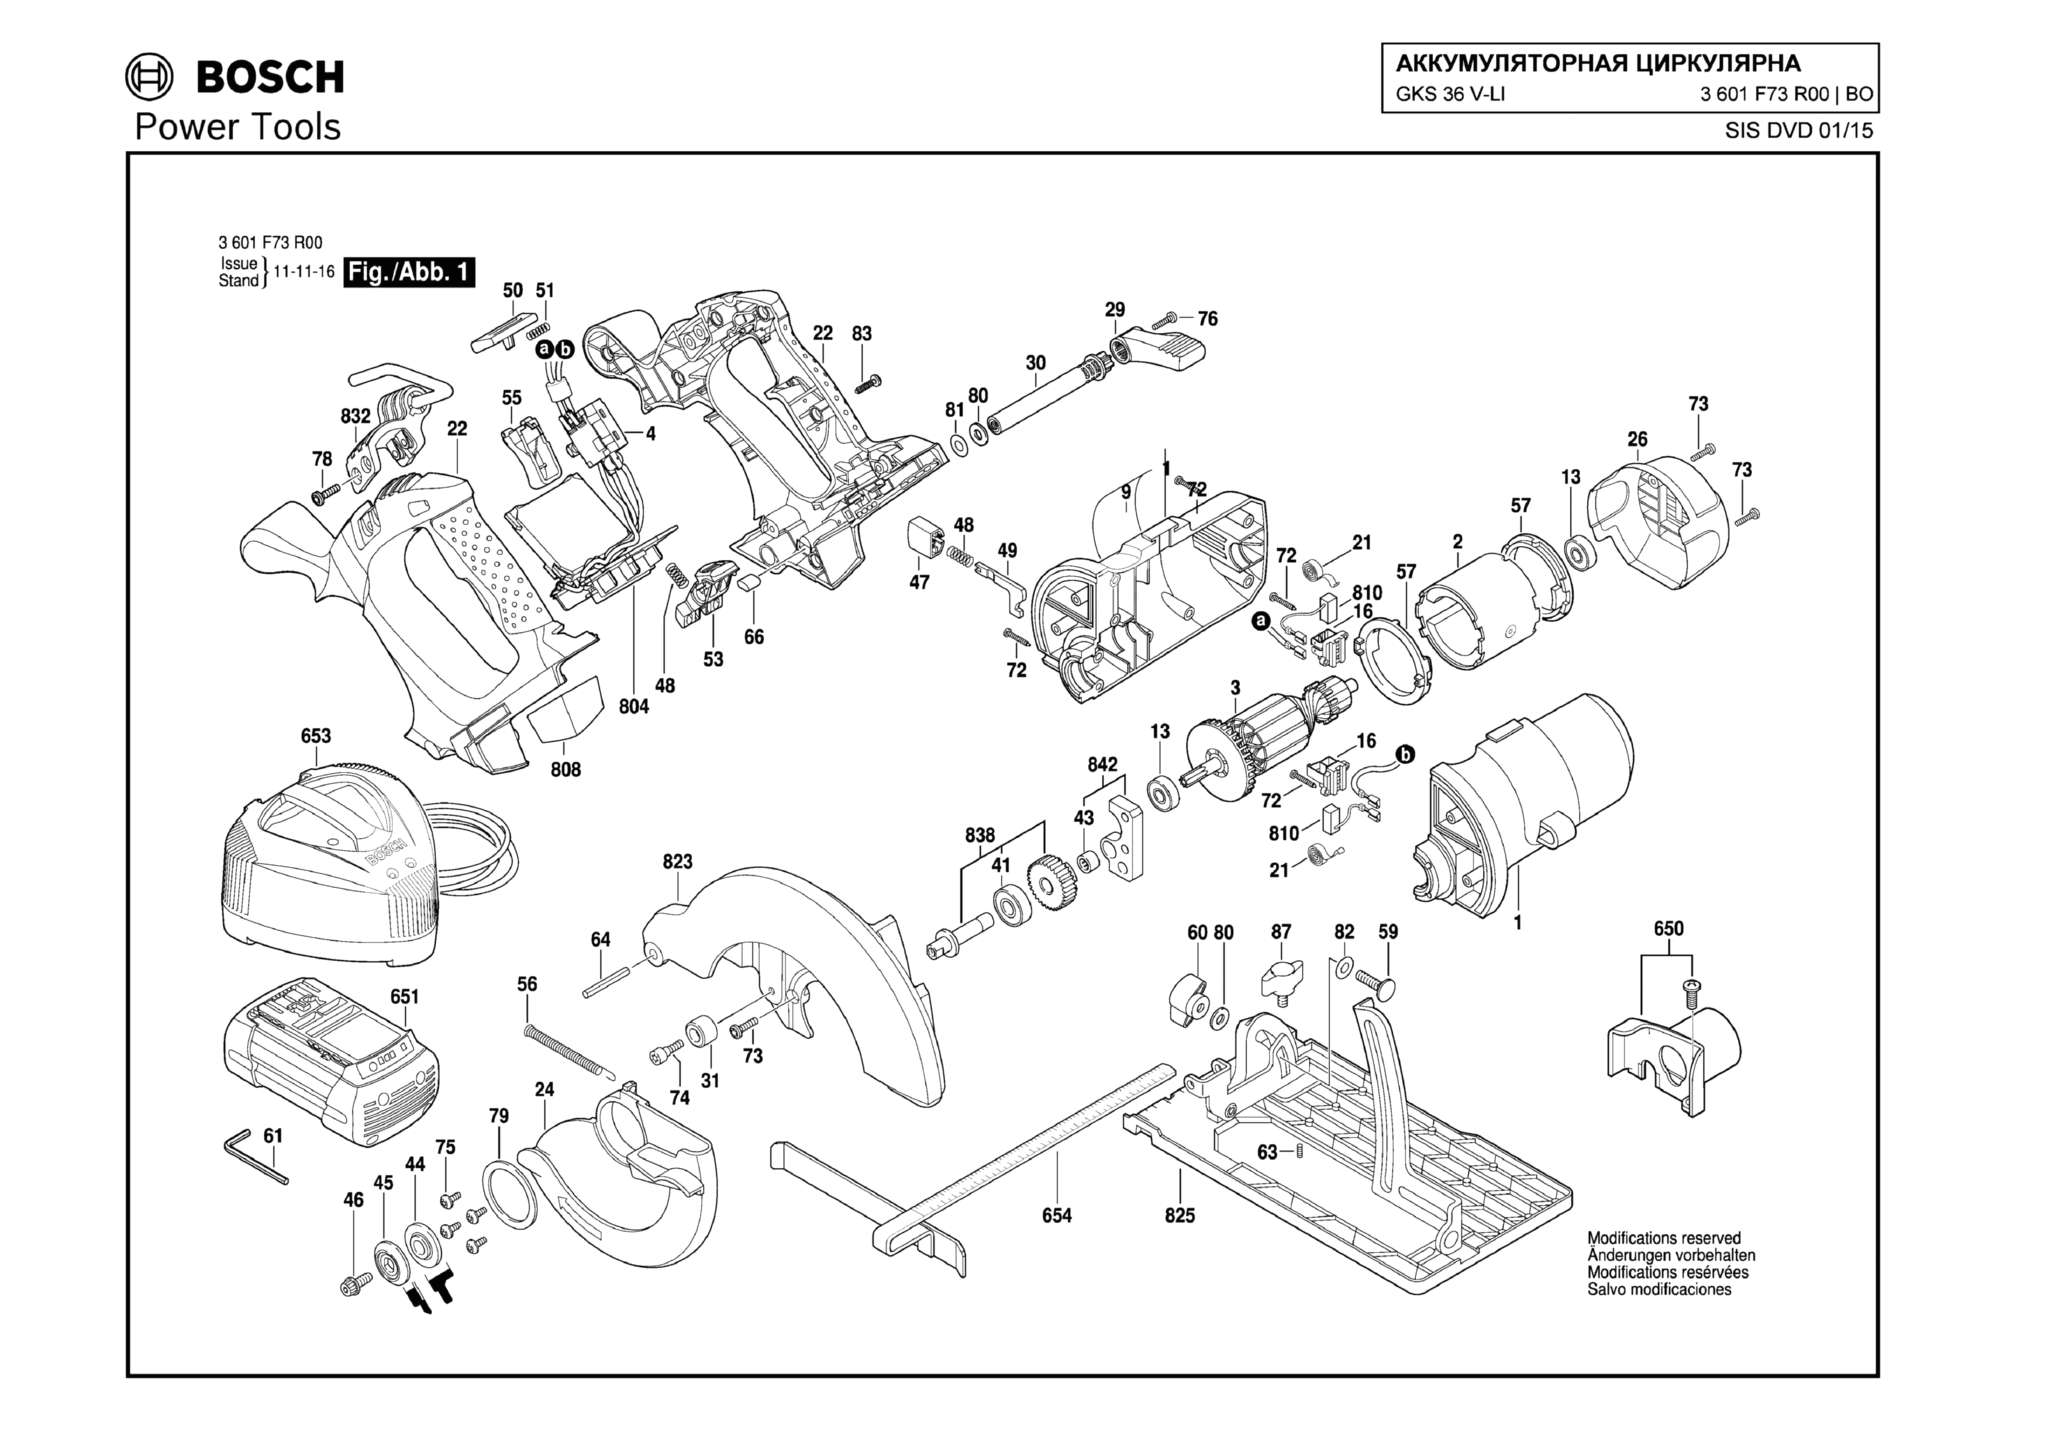 Запчасти, схема и деталировка Bosch GKS 36 V-LI (ТИП 3601F73R00)